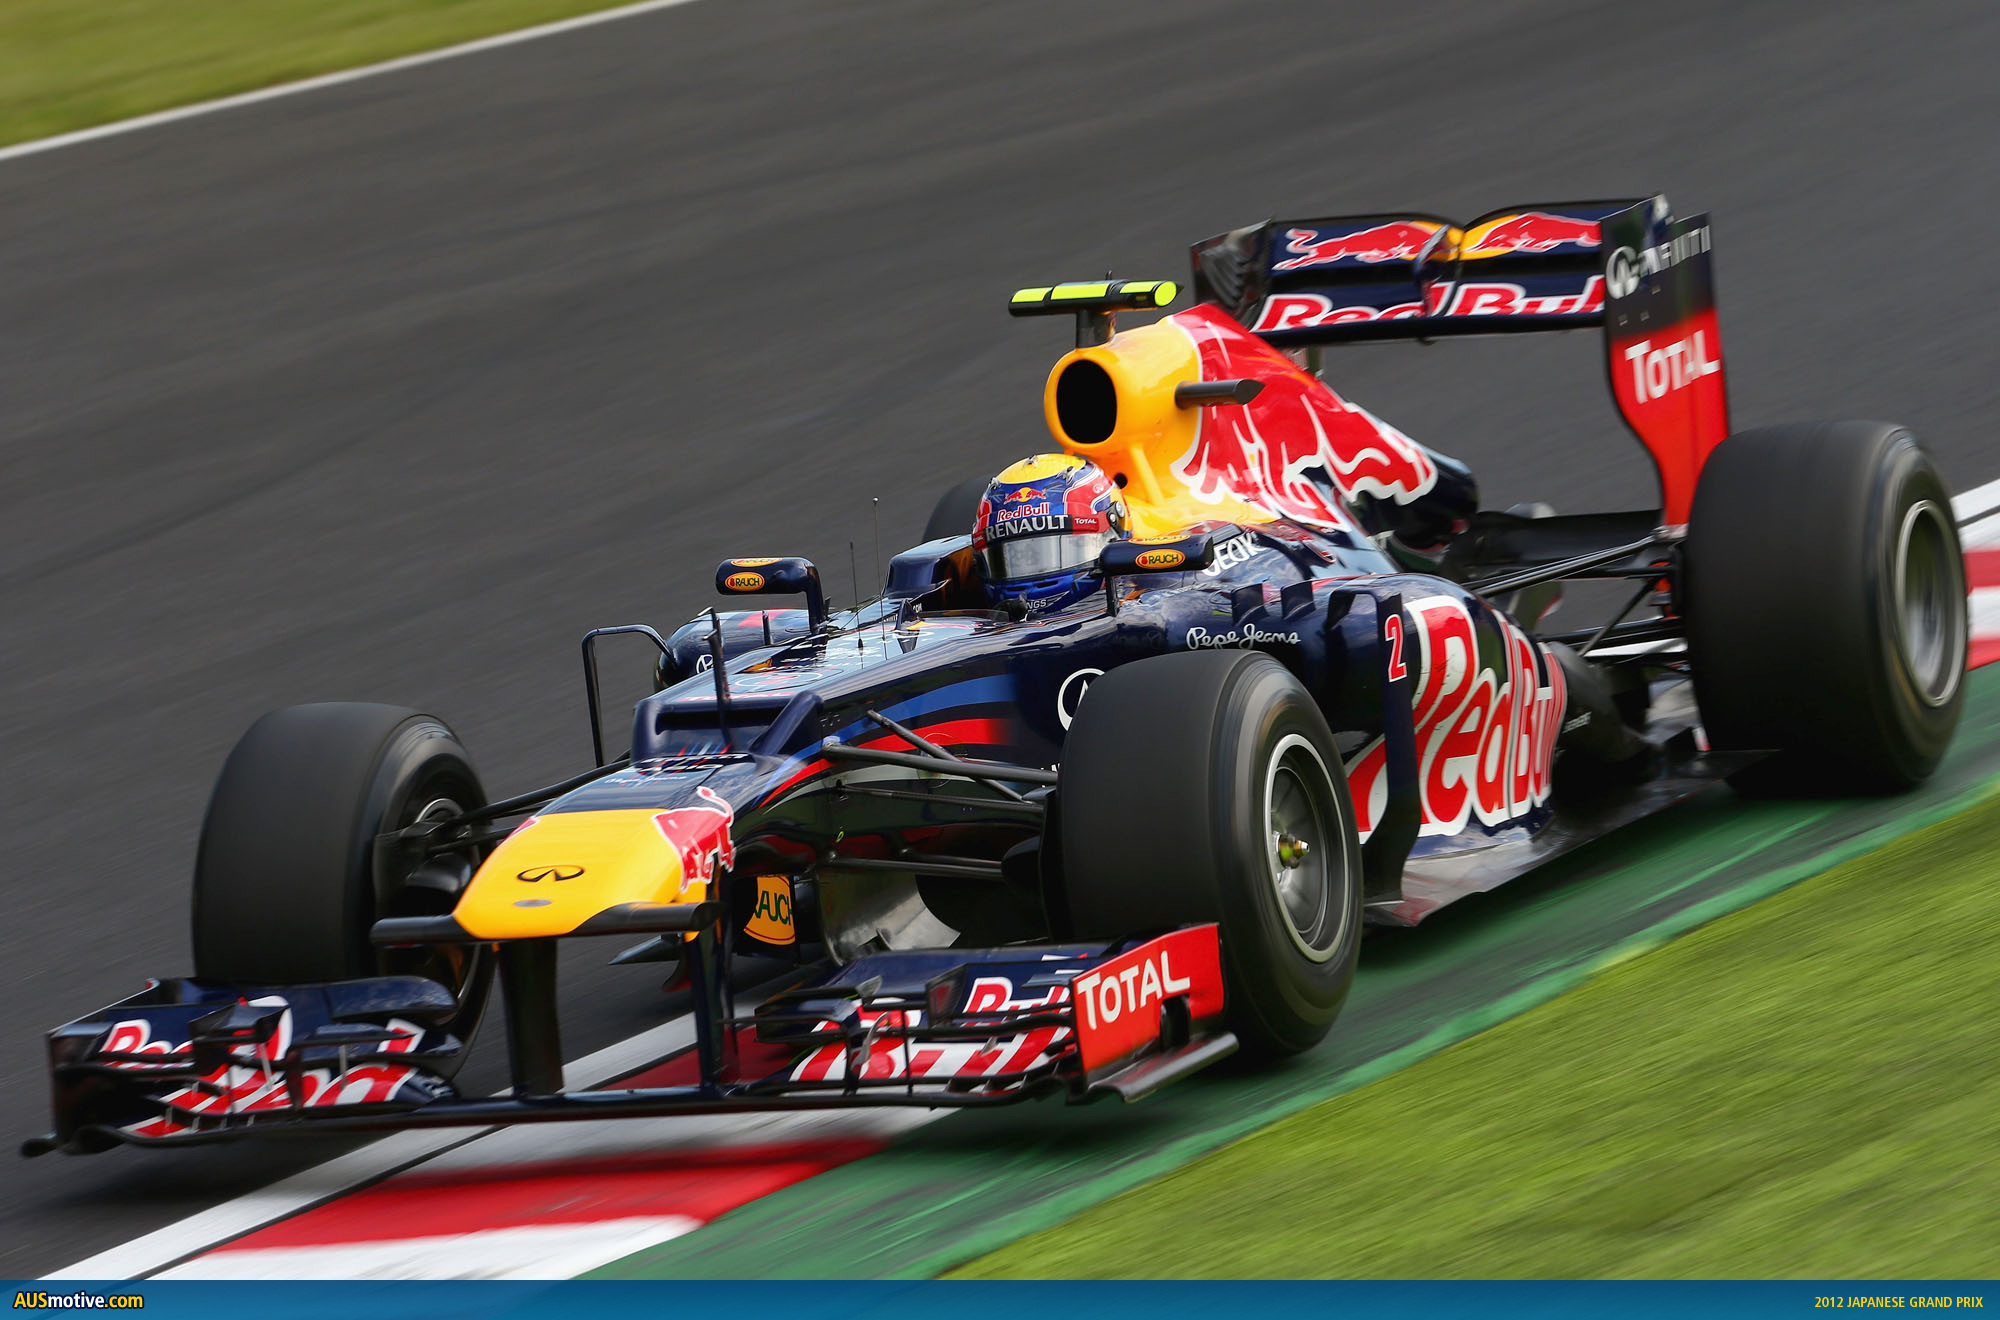 2012 Japanese Grand Prix in pictures – AUSmotive.com